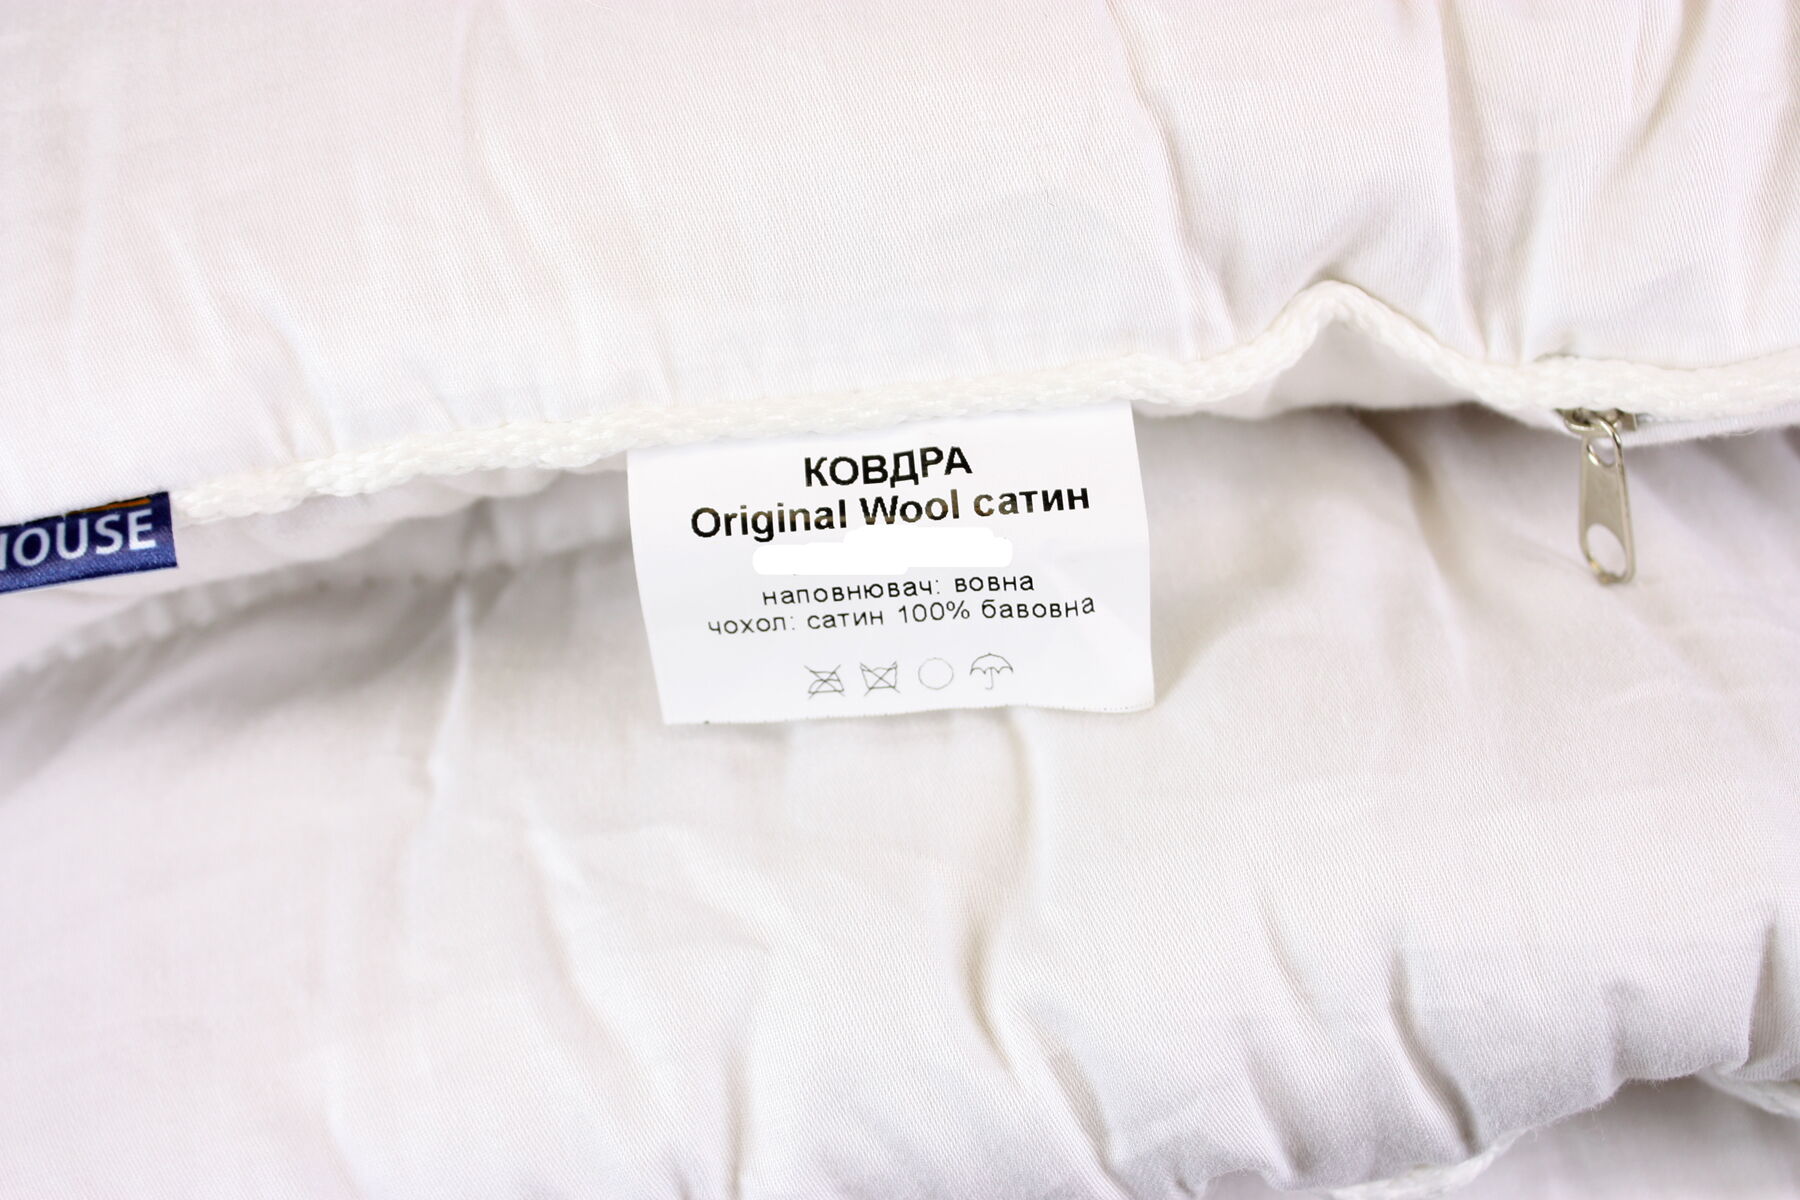 Одеяло шерстяное евро LightHouse Original Wool сатин 195*215 - размеры